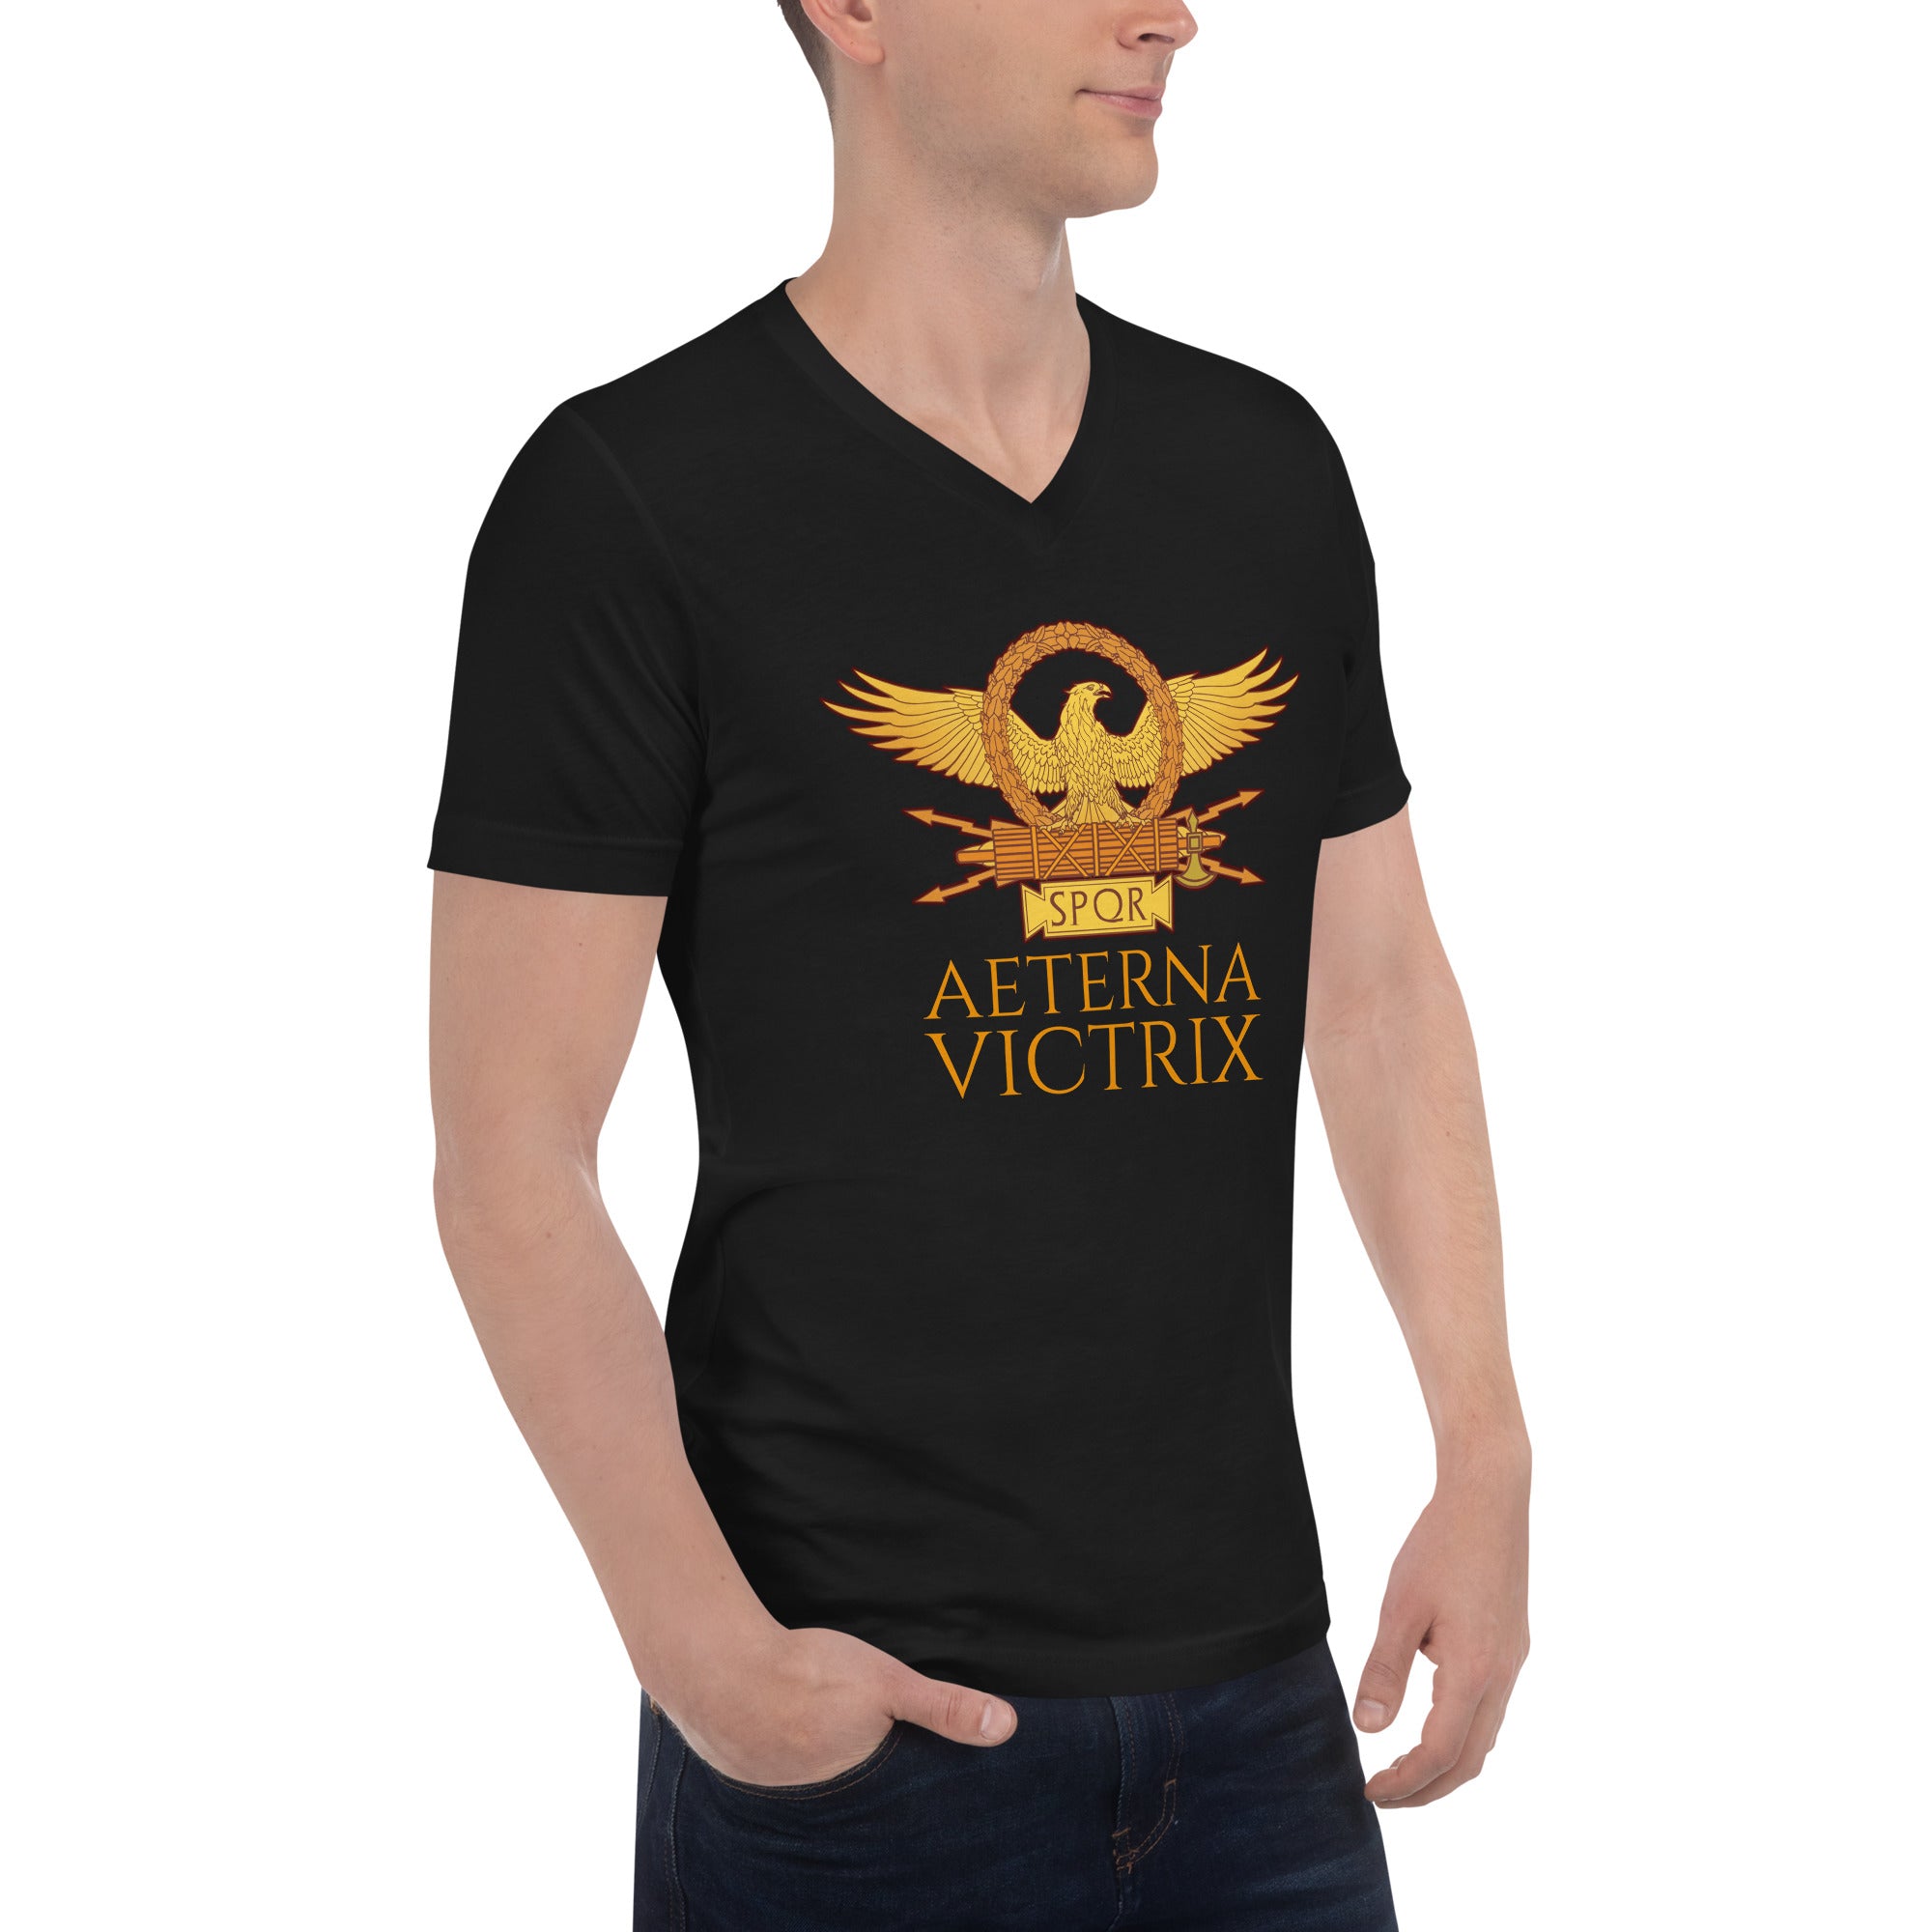 Aeterna Victrix - Eternal Victory - Ancient Rome - Unisex Short Sleeve V-Neck T-Shirt